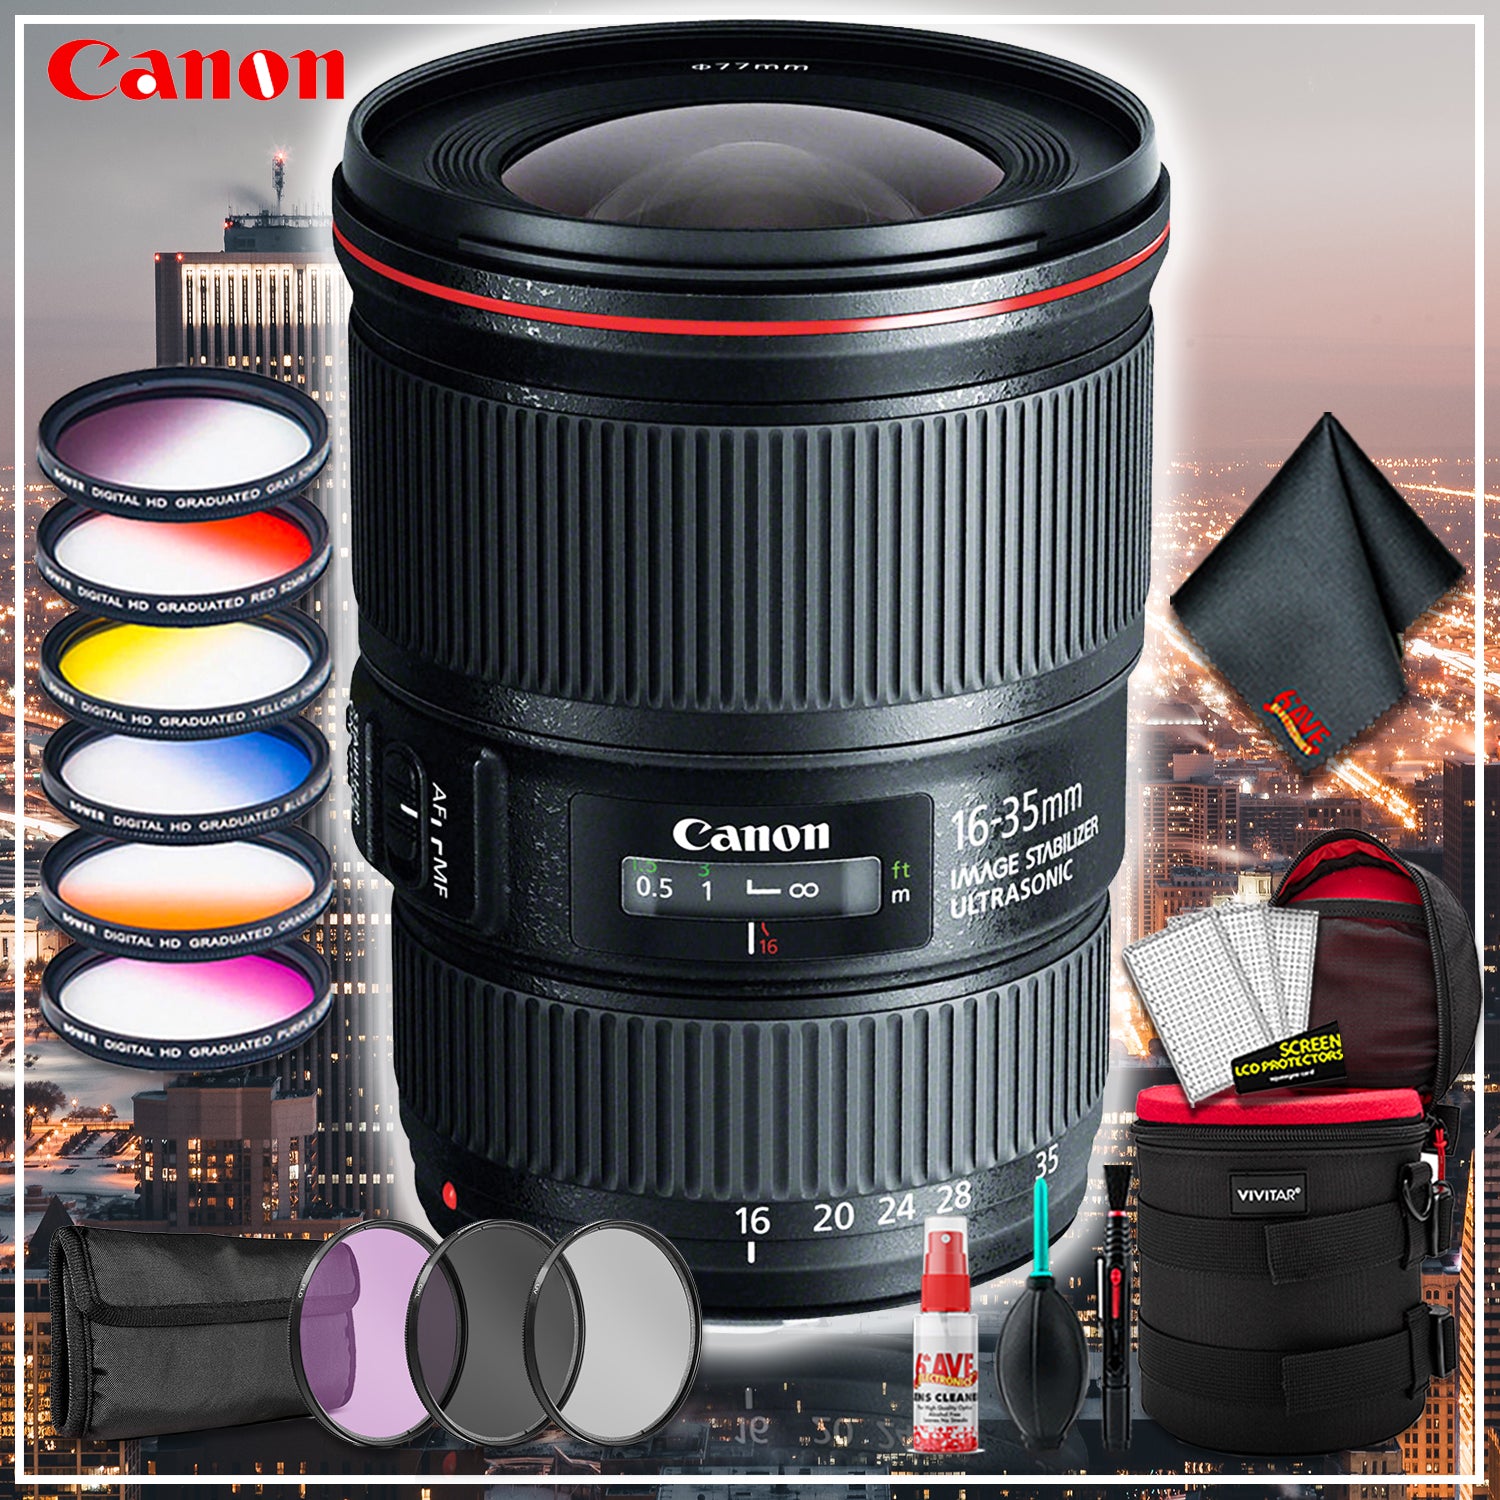 Canon EF 16-35 4.0 f/4 L IS USM (Intl Model) + 6 inch Premium Lens Case + Loaded Lens Filter Kit + Cleaning Kit